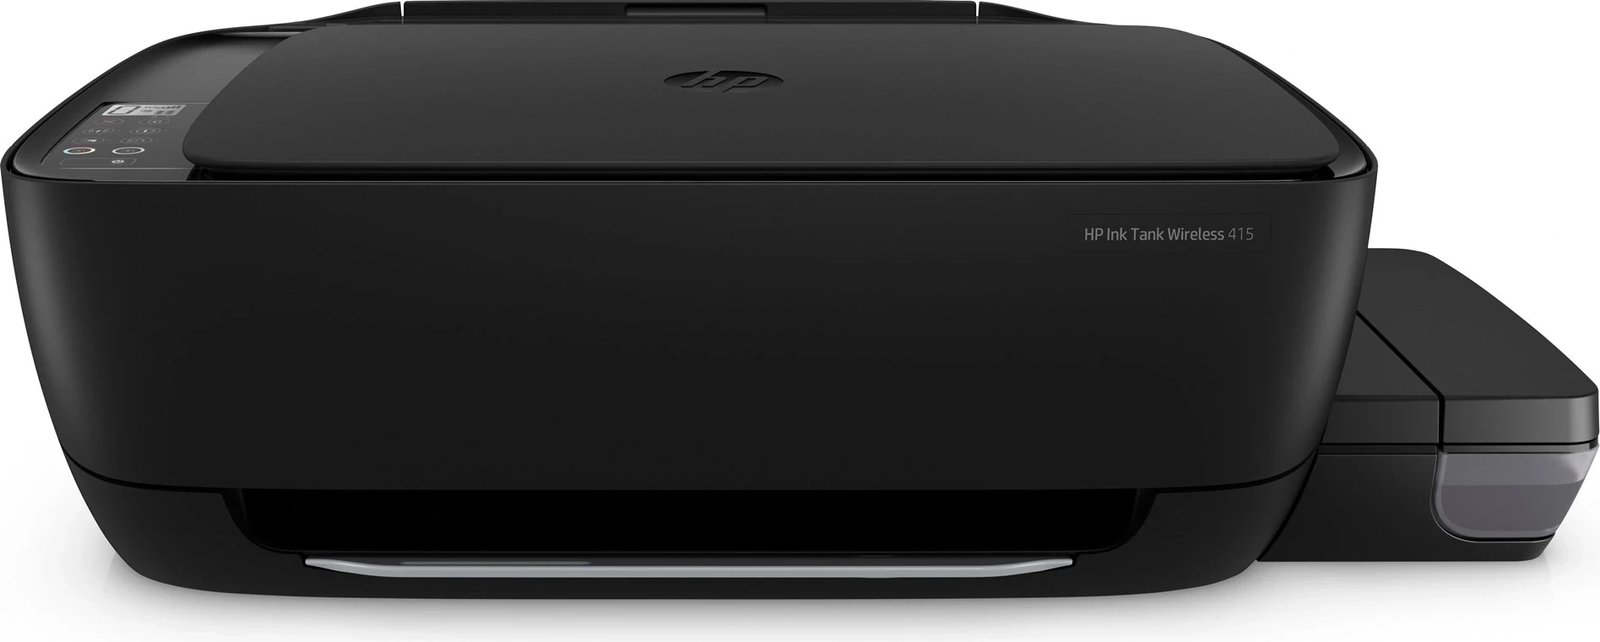 Printer pa tela HP Ink Tank Wireless 415